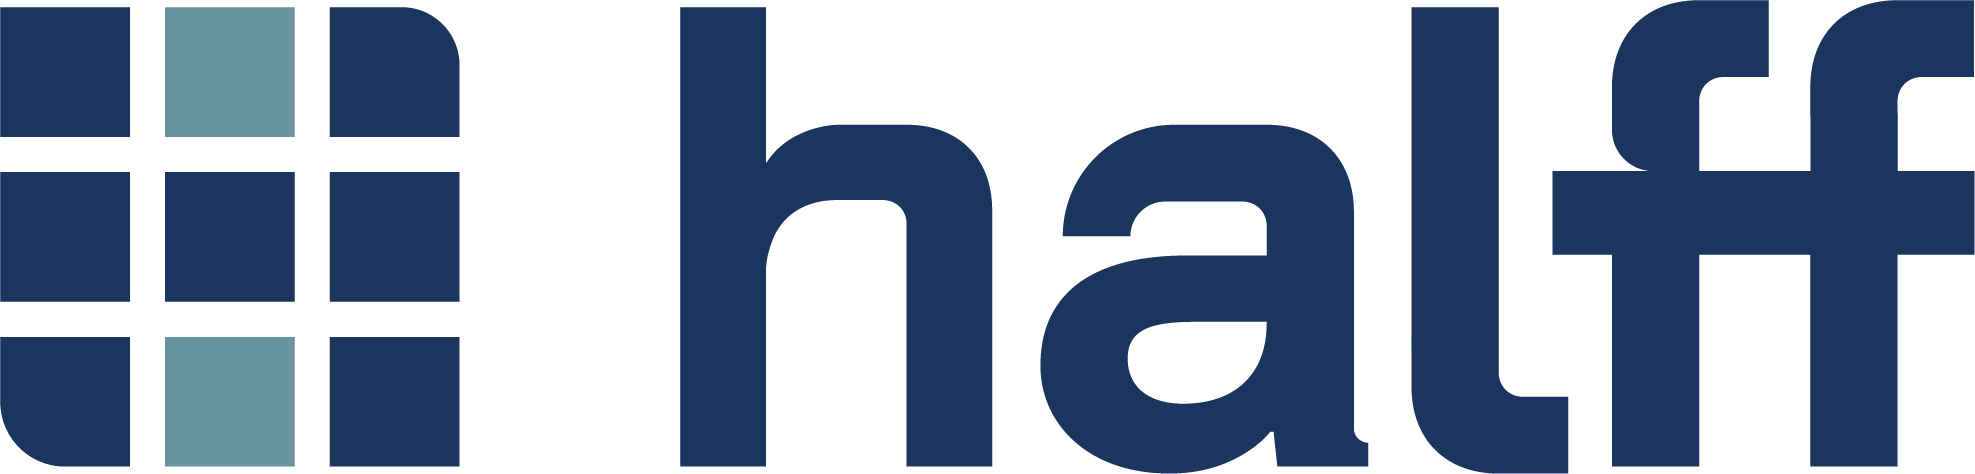 Halff Associates, Inc. Company Logo